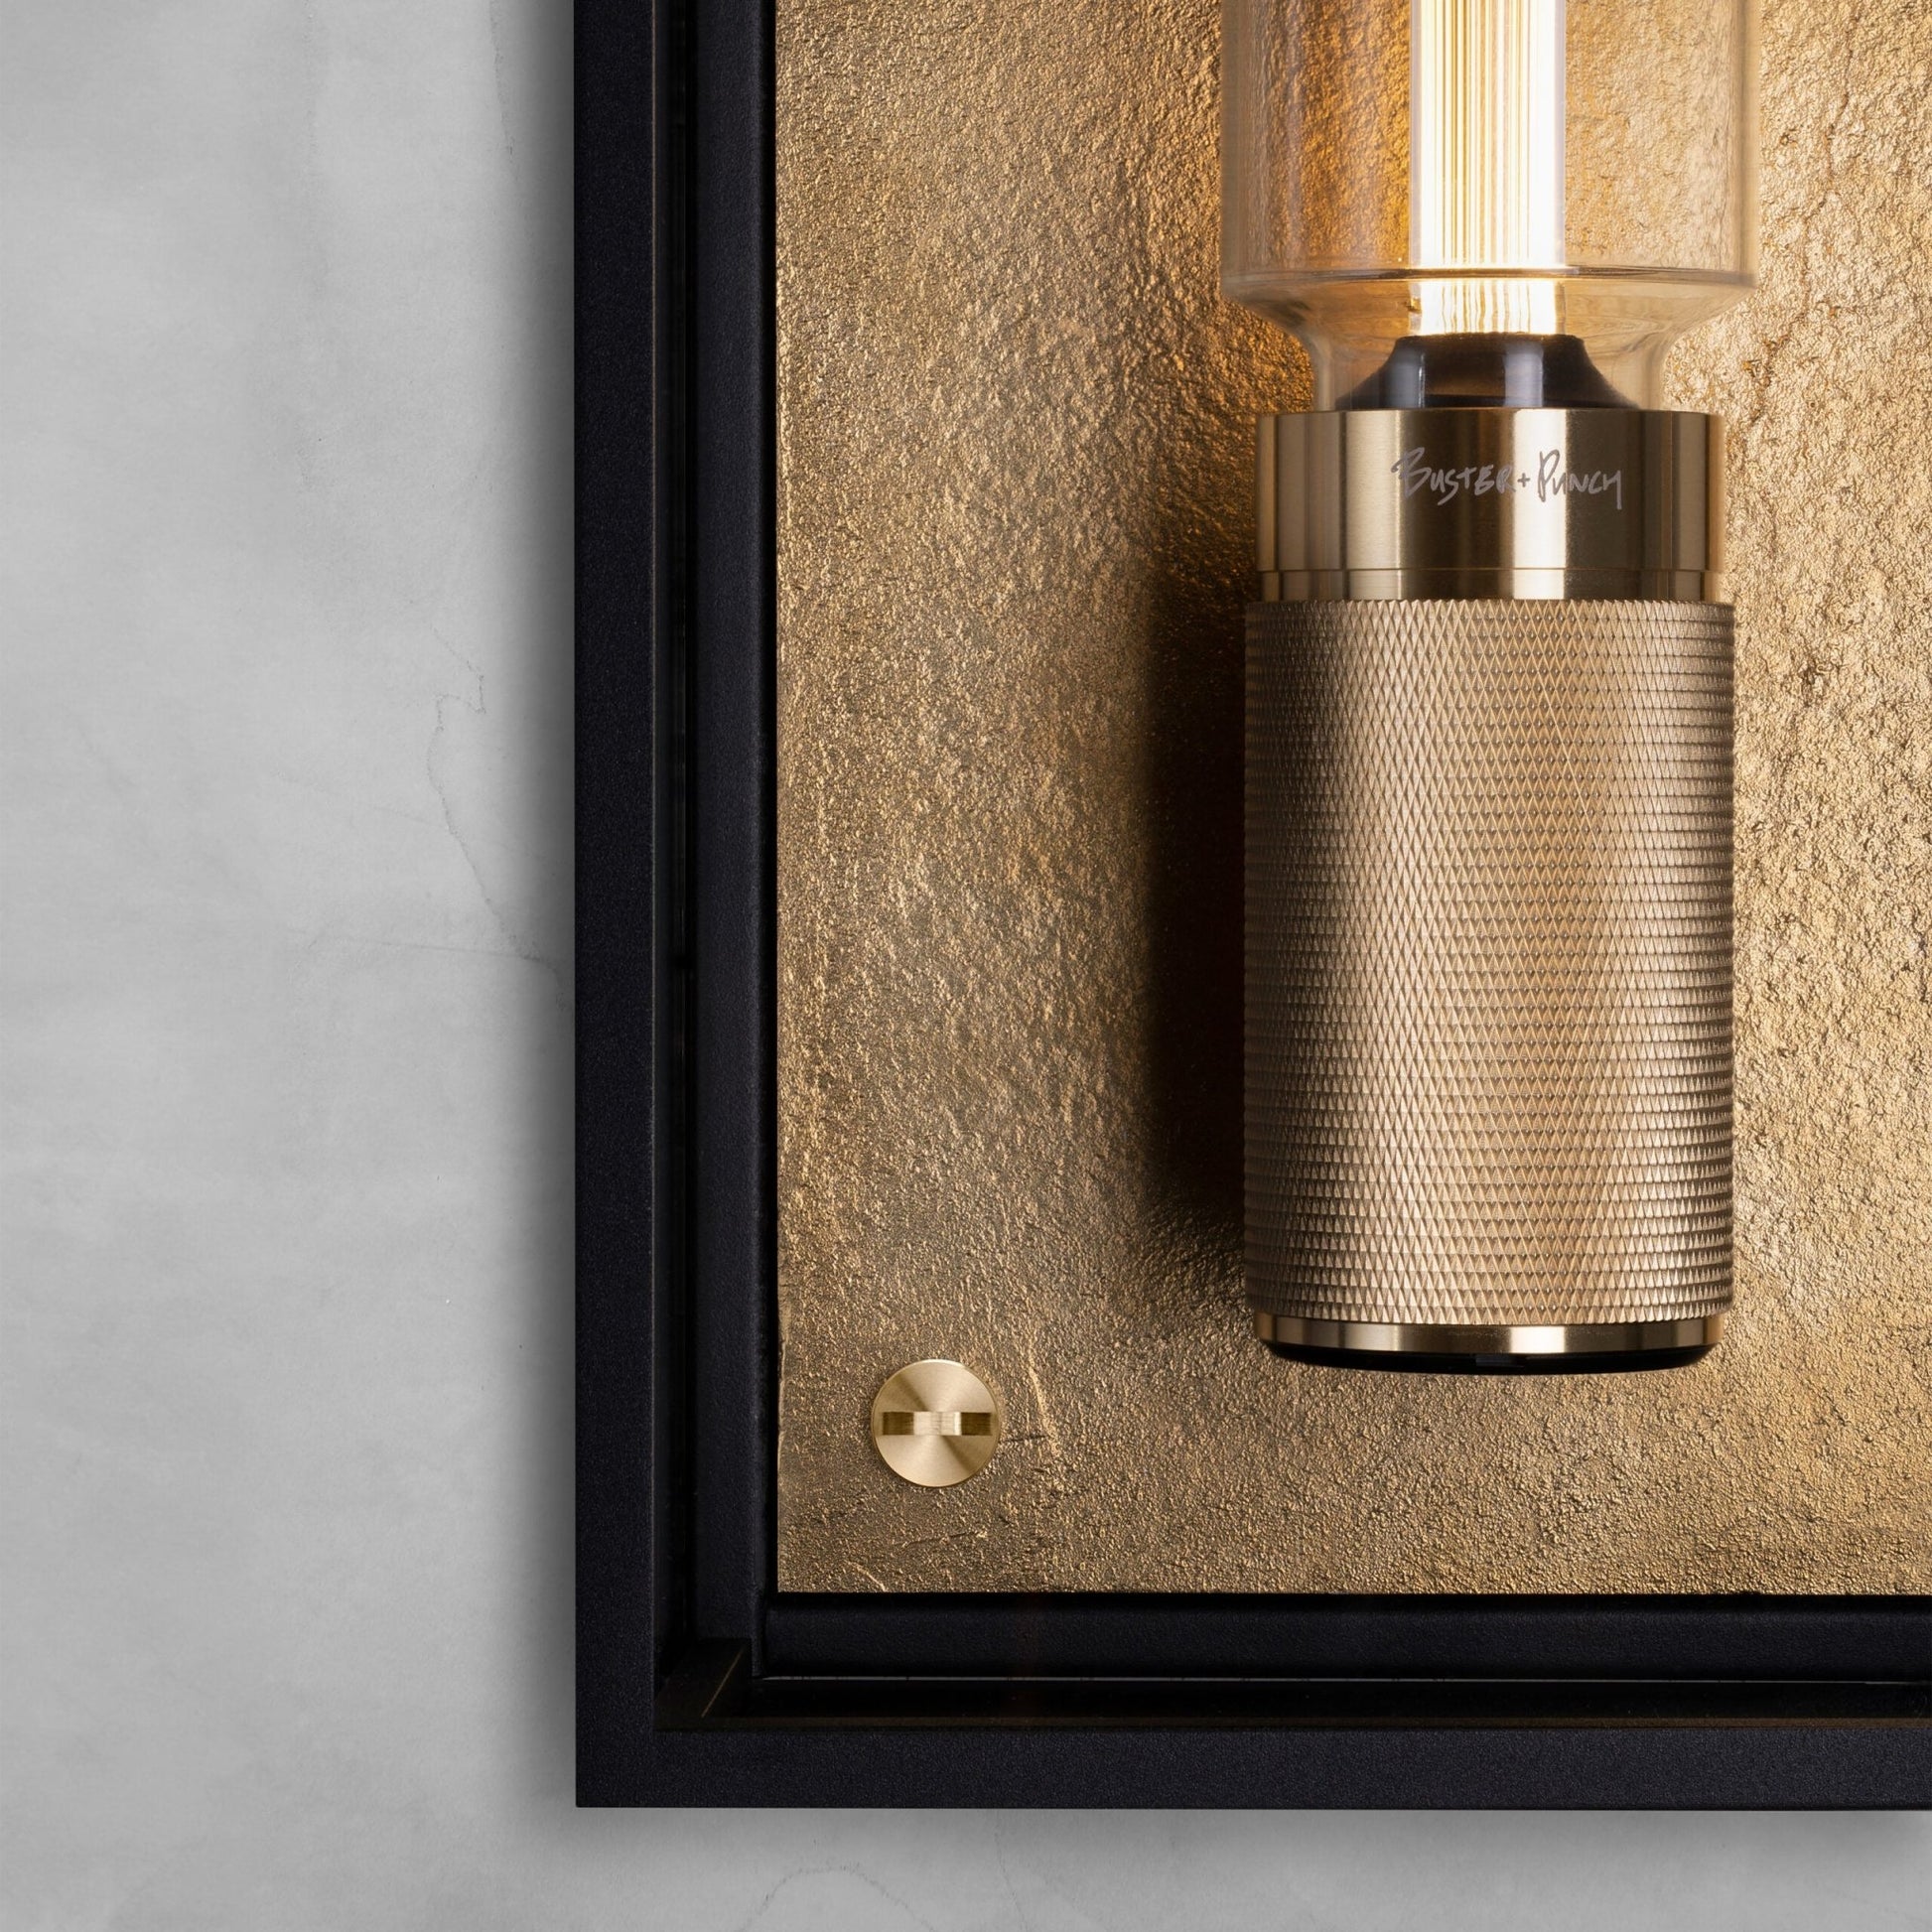 Industrial Caged Wall Bathroom Light in Brass - |VESIMI Design|